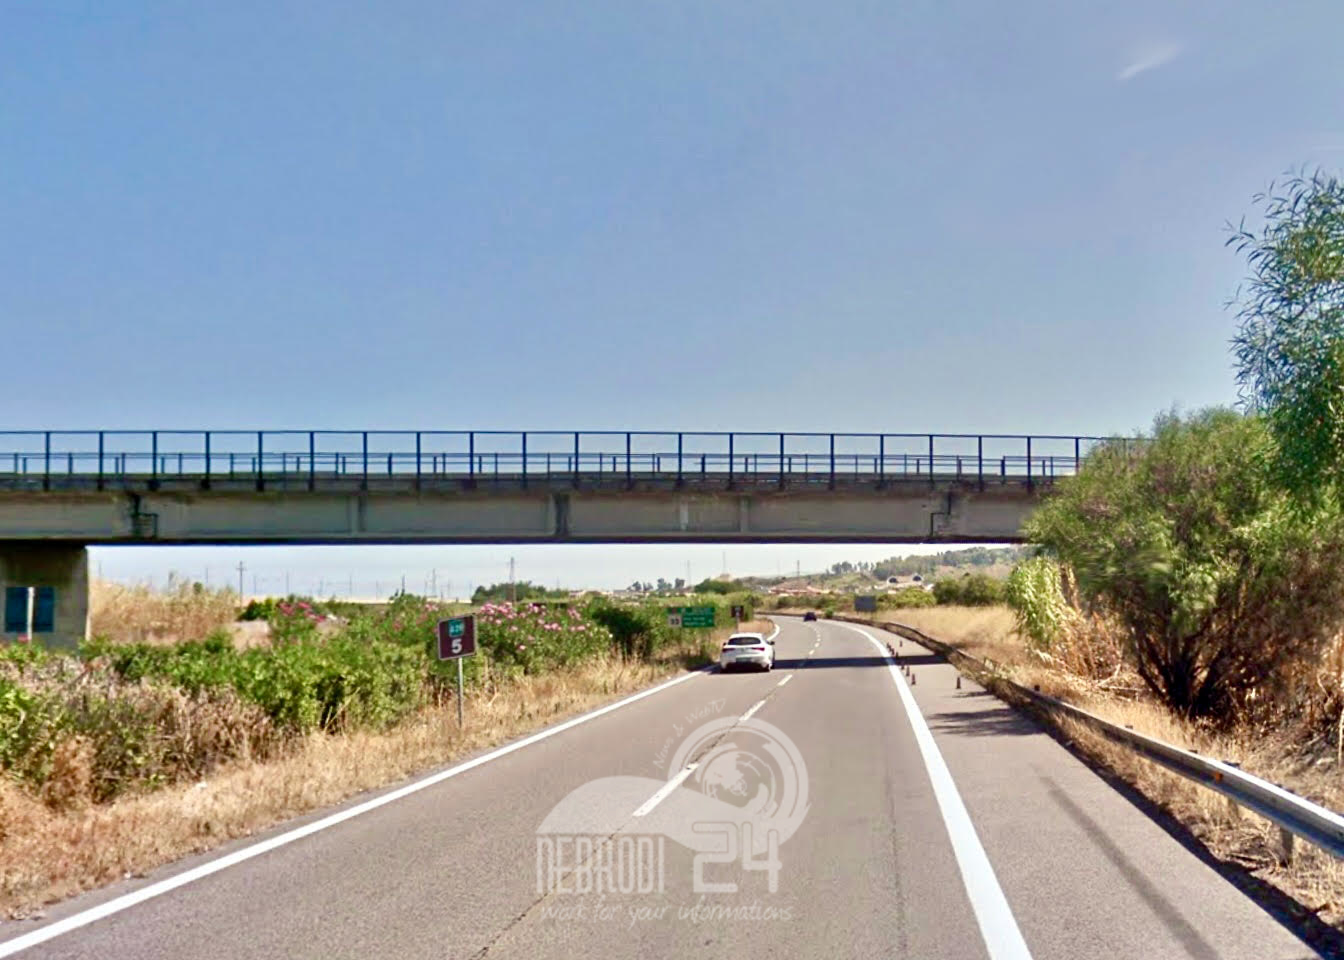 Messina – Da oggi autostrade più care!